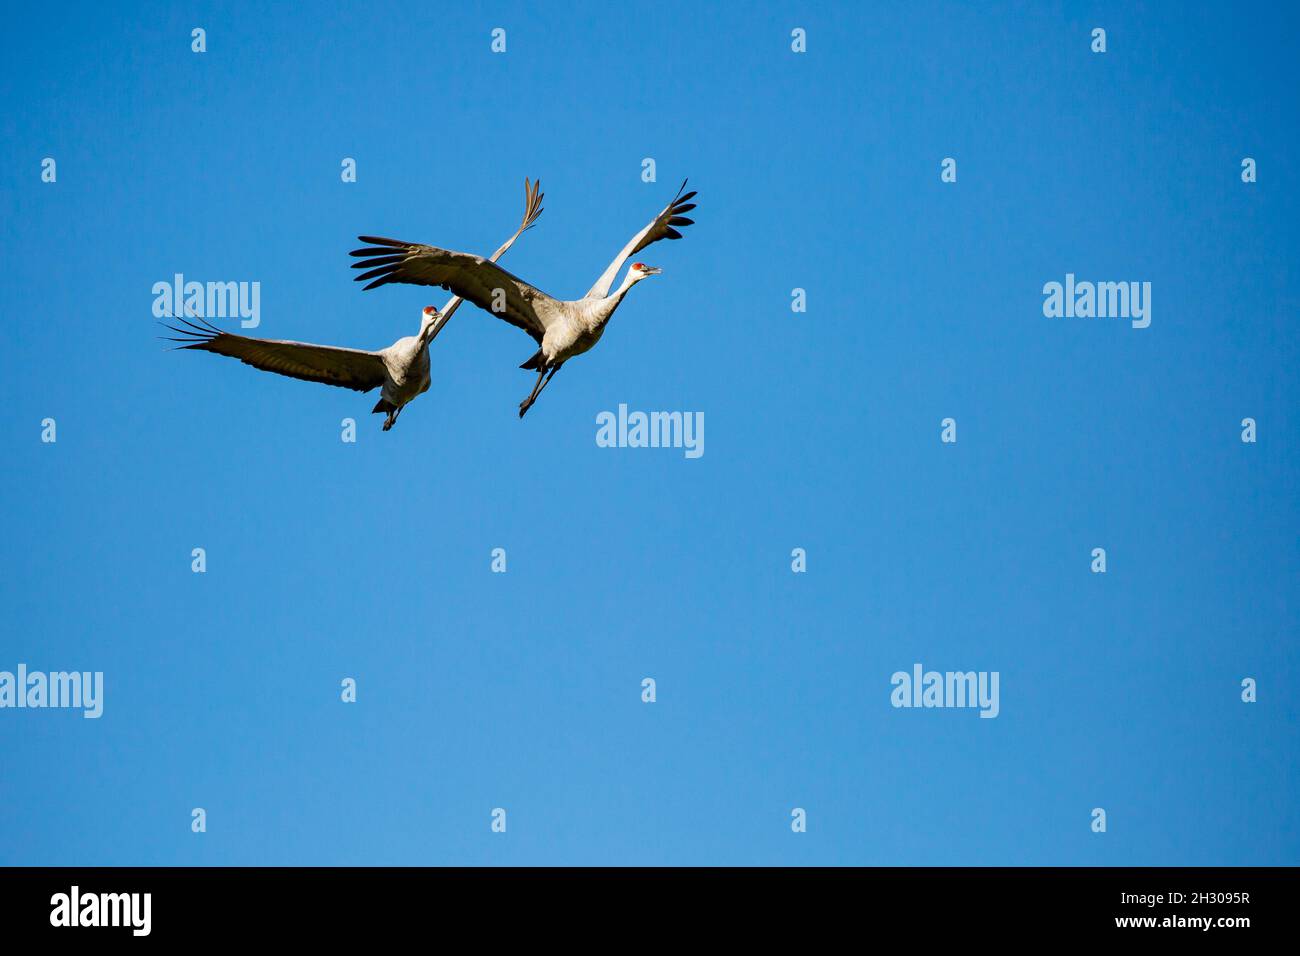 Paire de grues du Canada (Grus canadensis) volant dans un ciel bleu, horizontal Banque D'Images